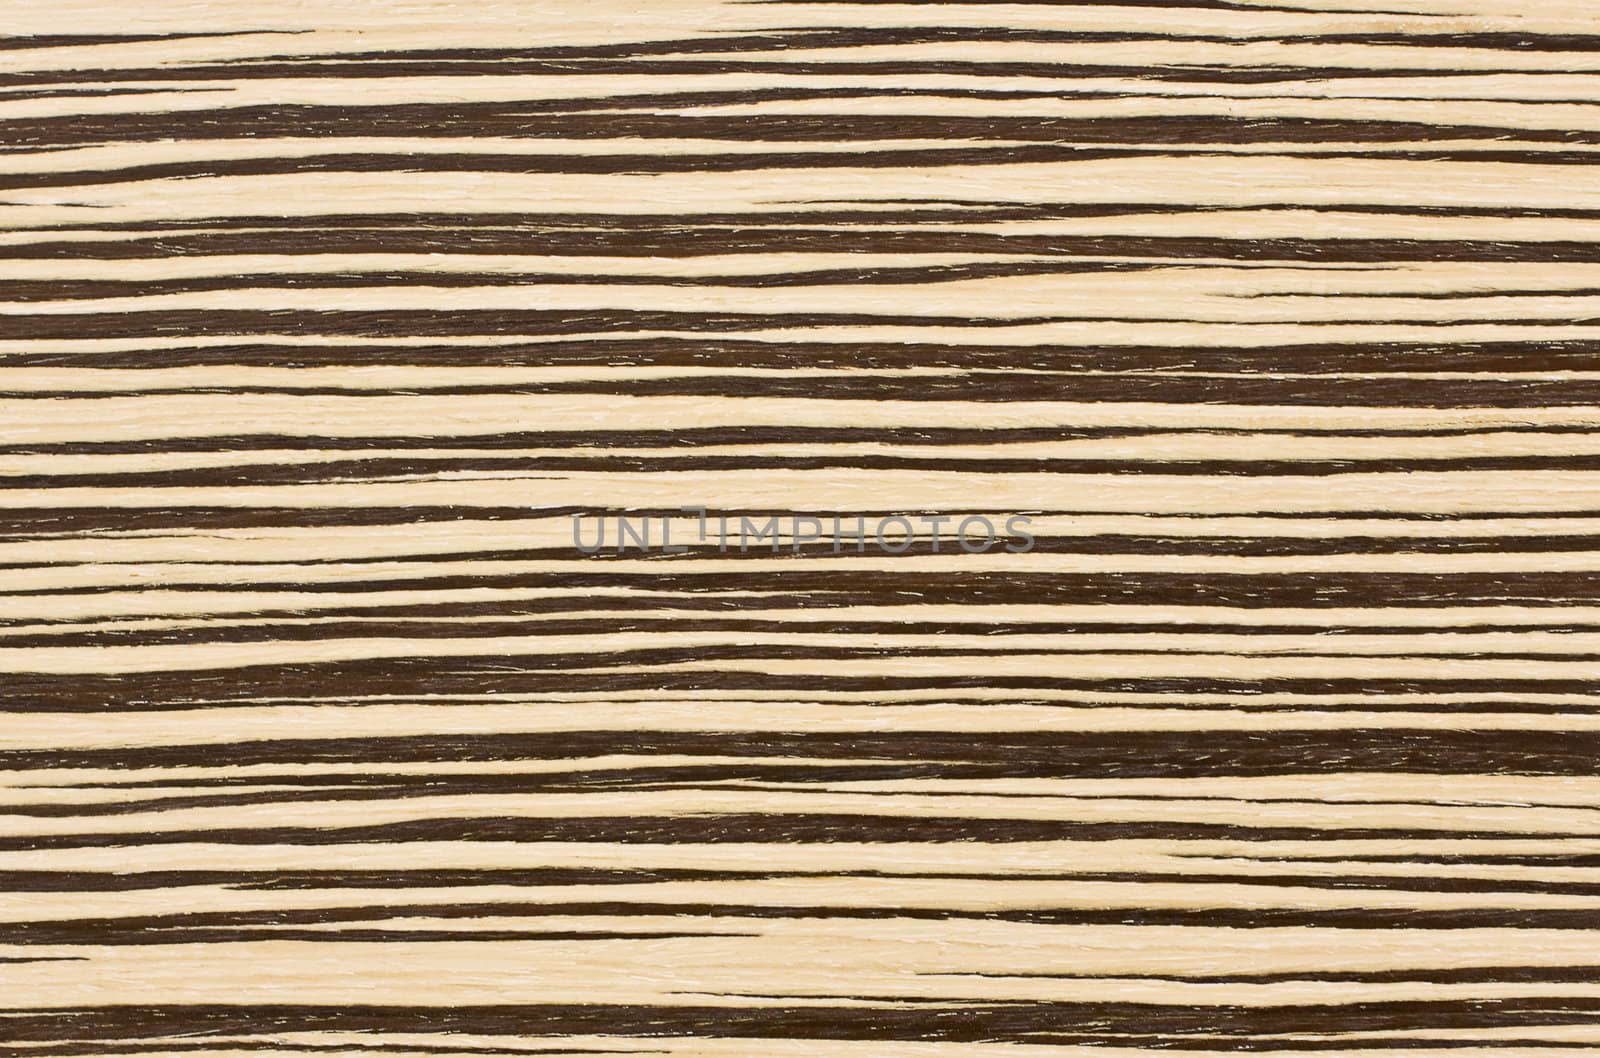 Zebra wood texture background by rozhenyuk